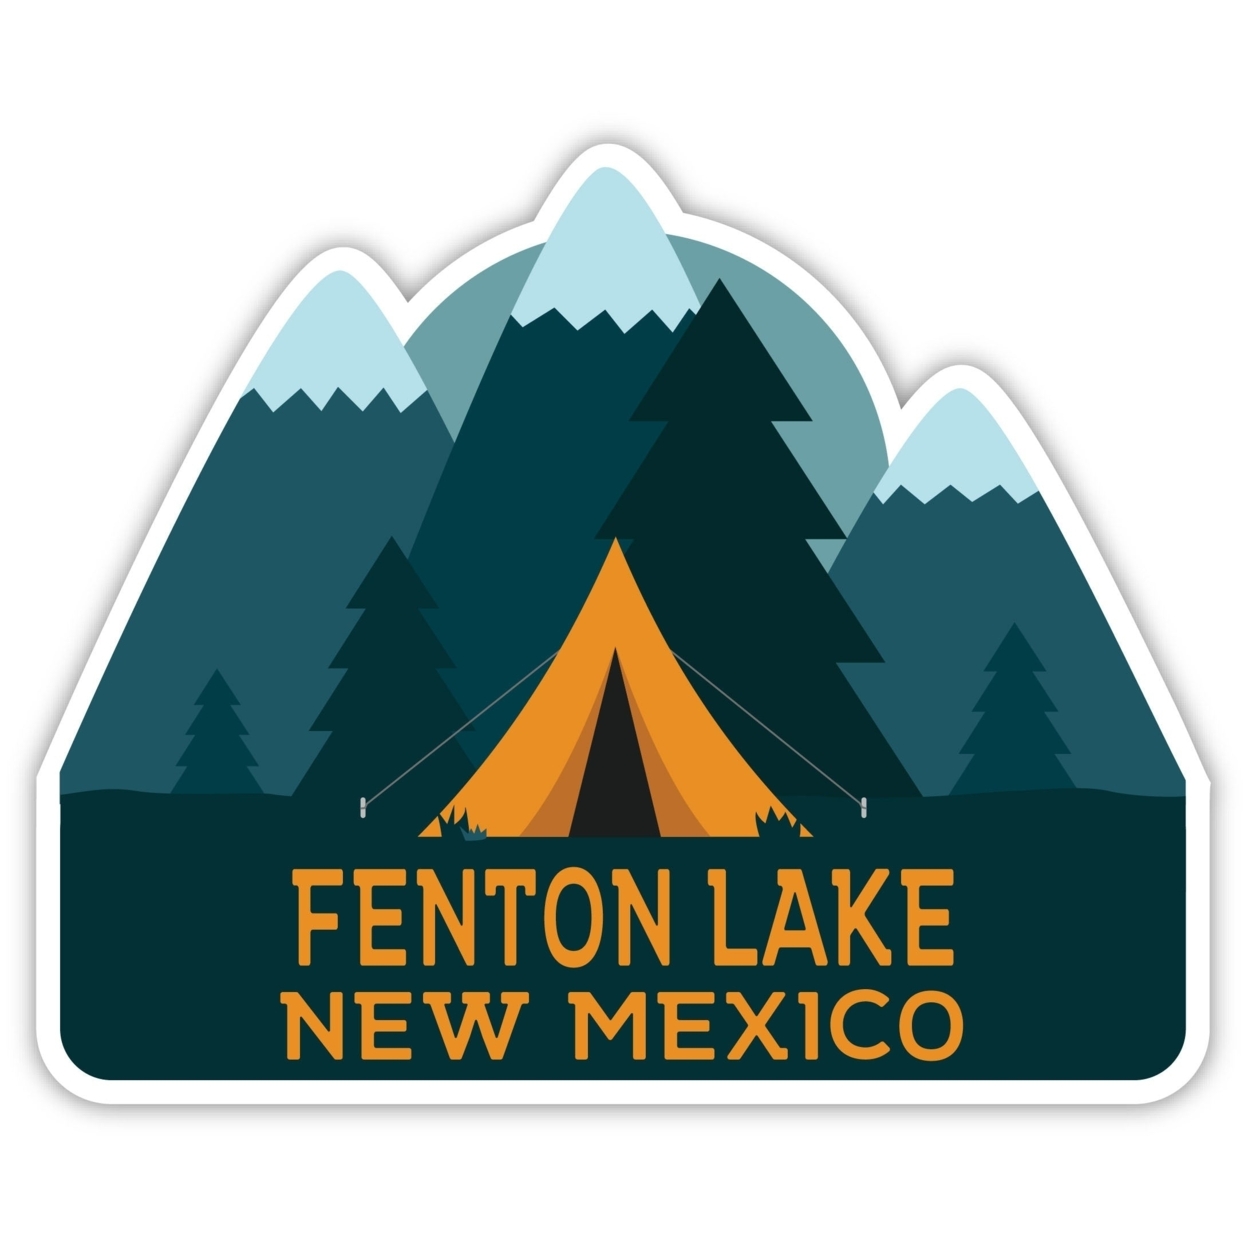 Fenton Lake New Mexico Souvenir Decorative Stickers (Choose Theme And Size) - Single Unit, 2-Inch, Tent